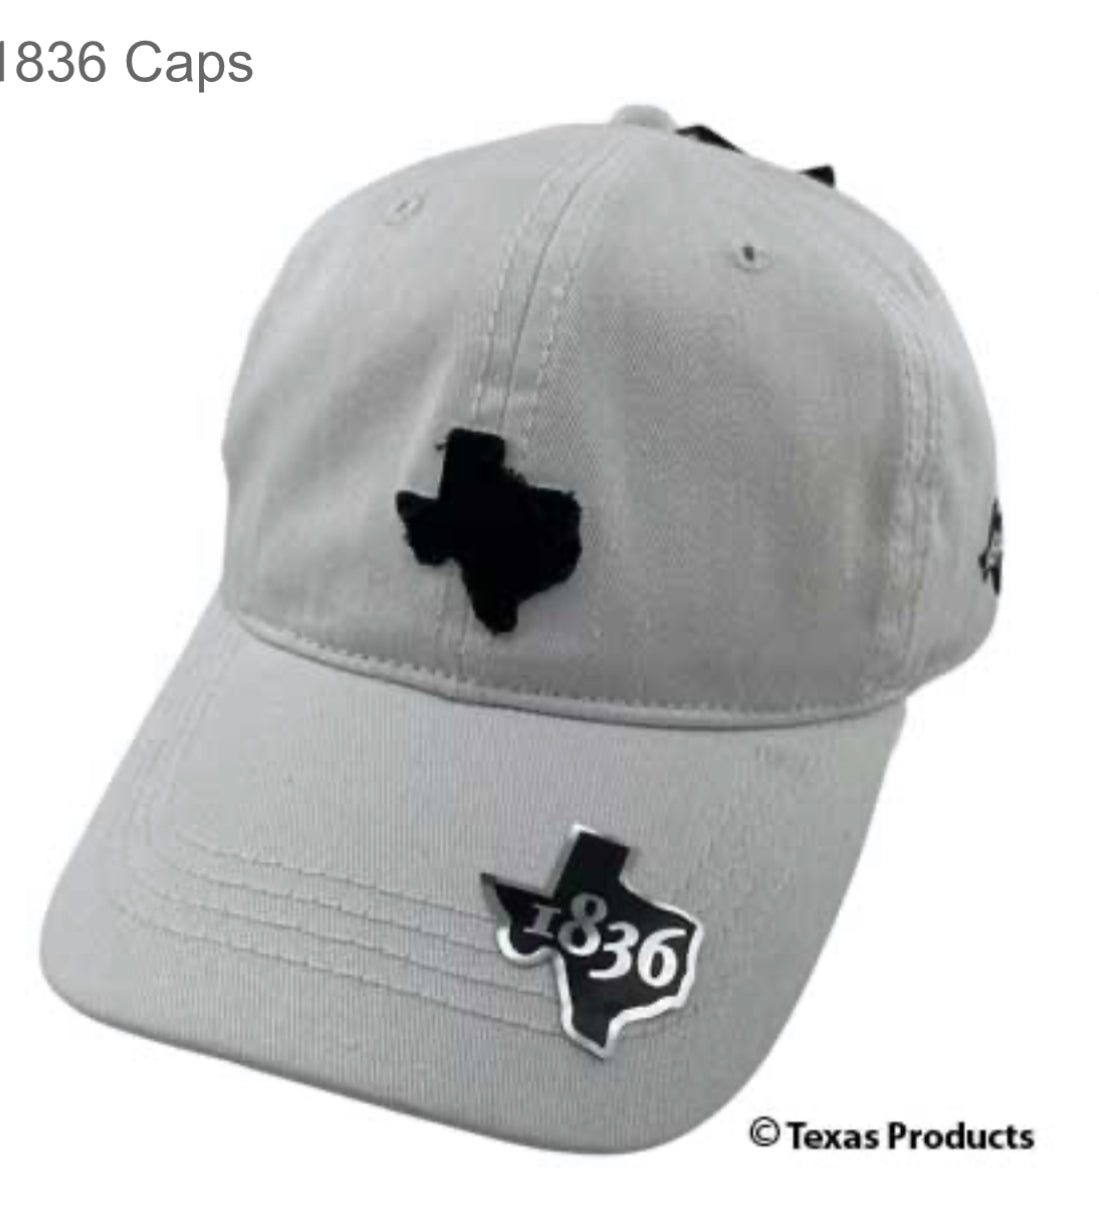 Texas 1836 Caps